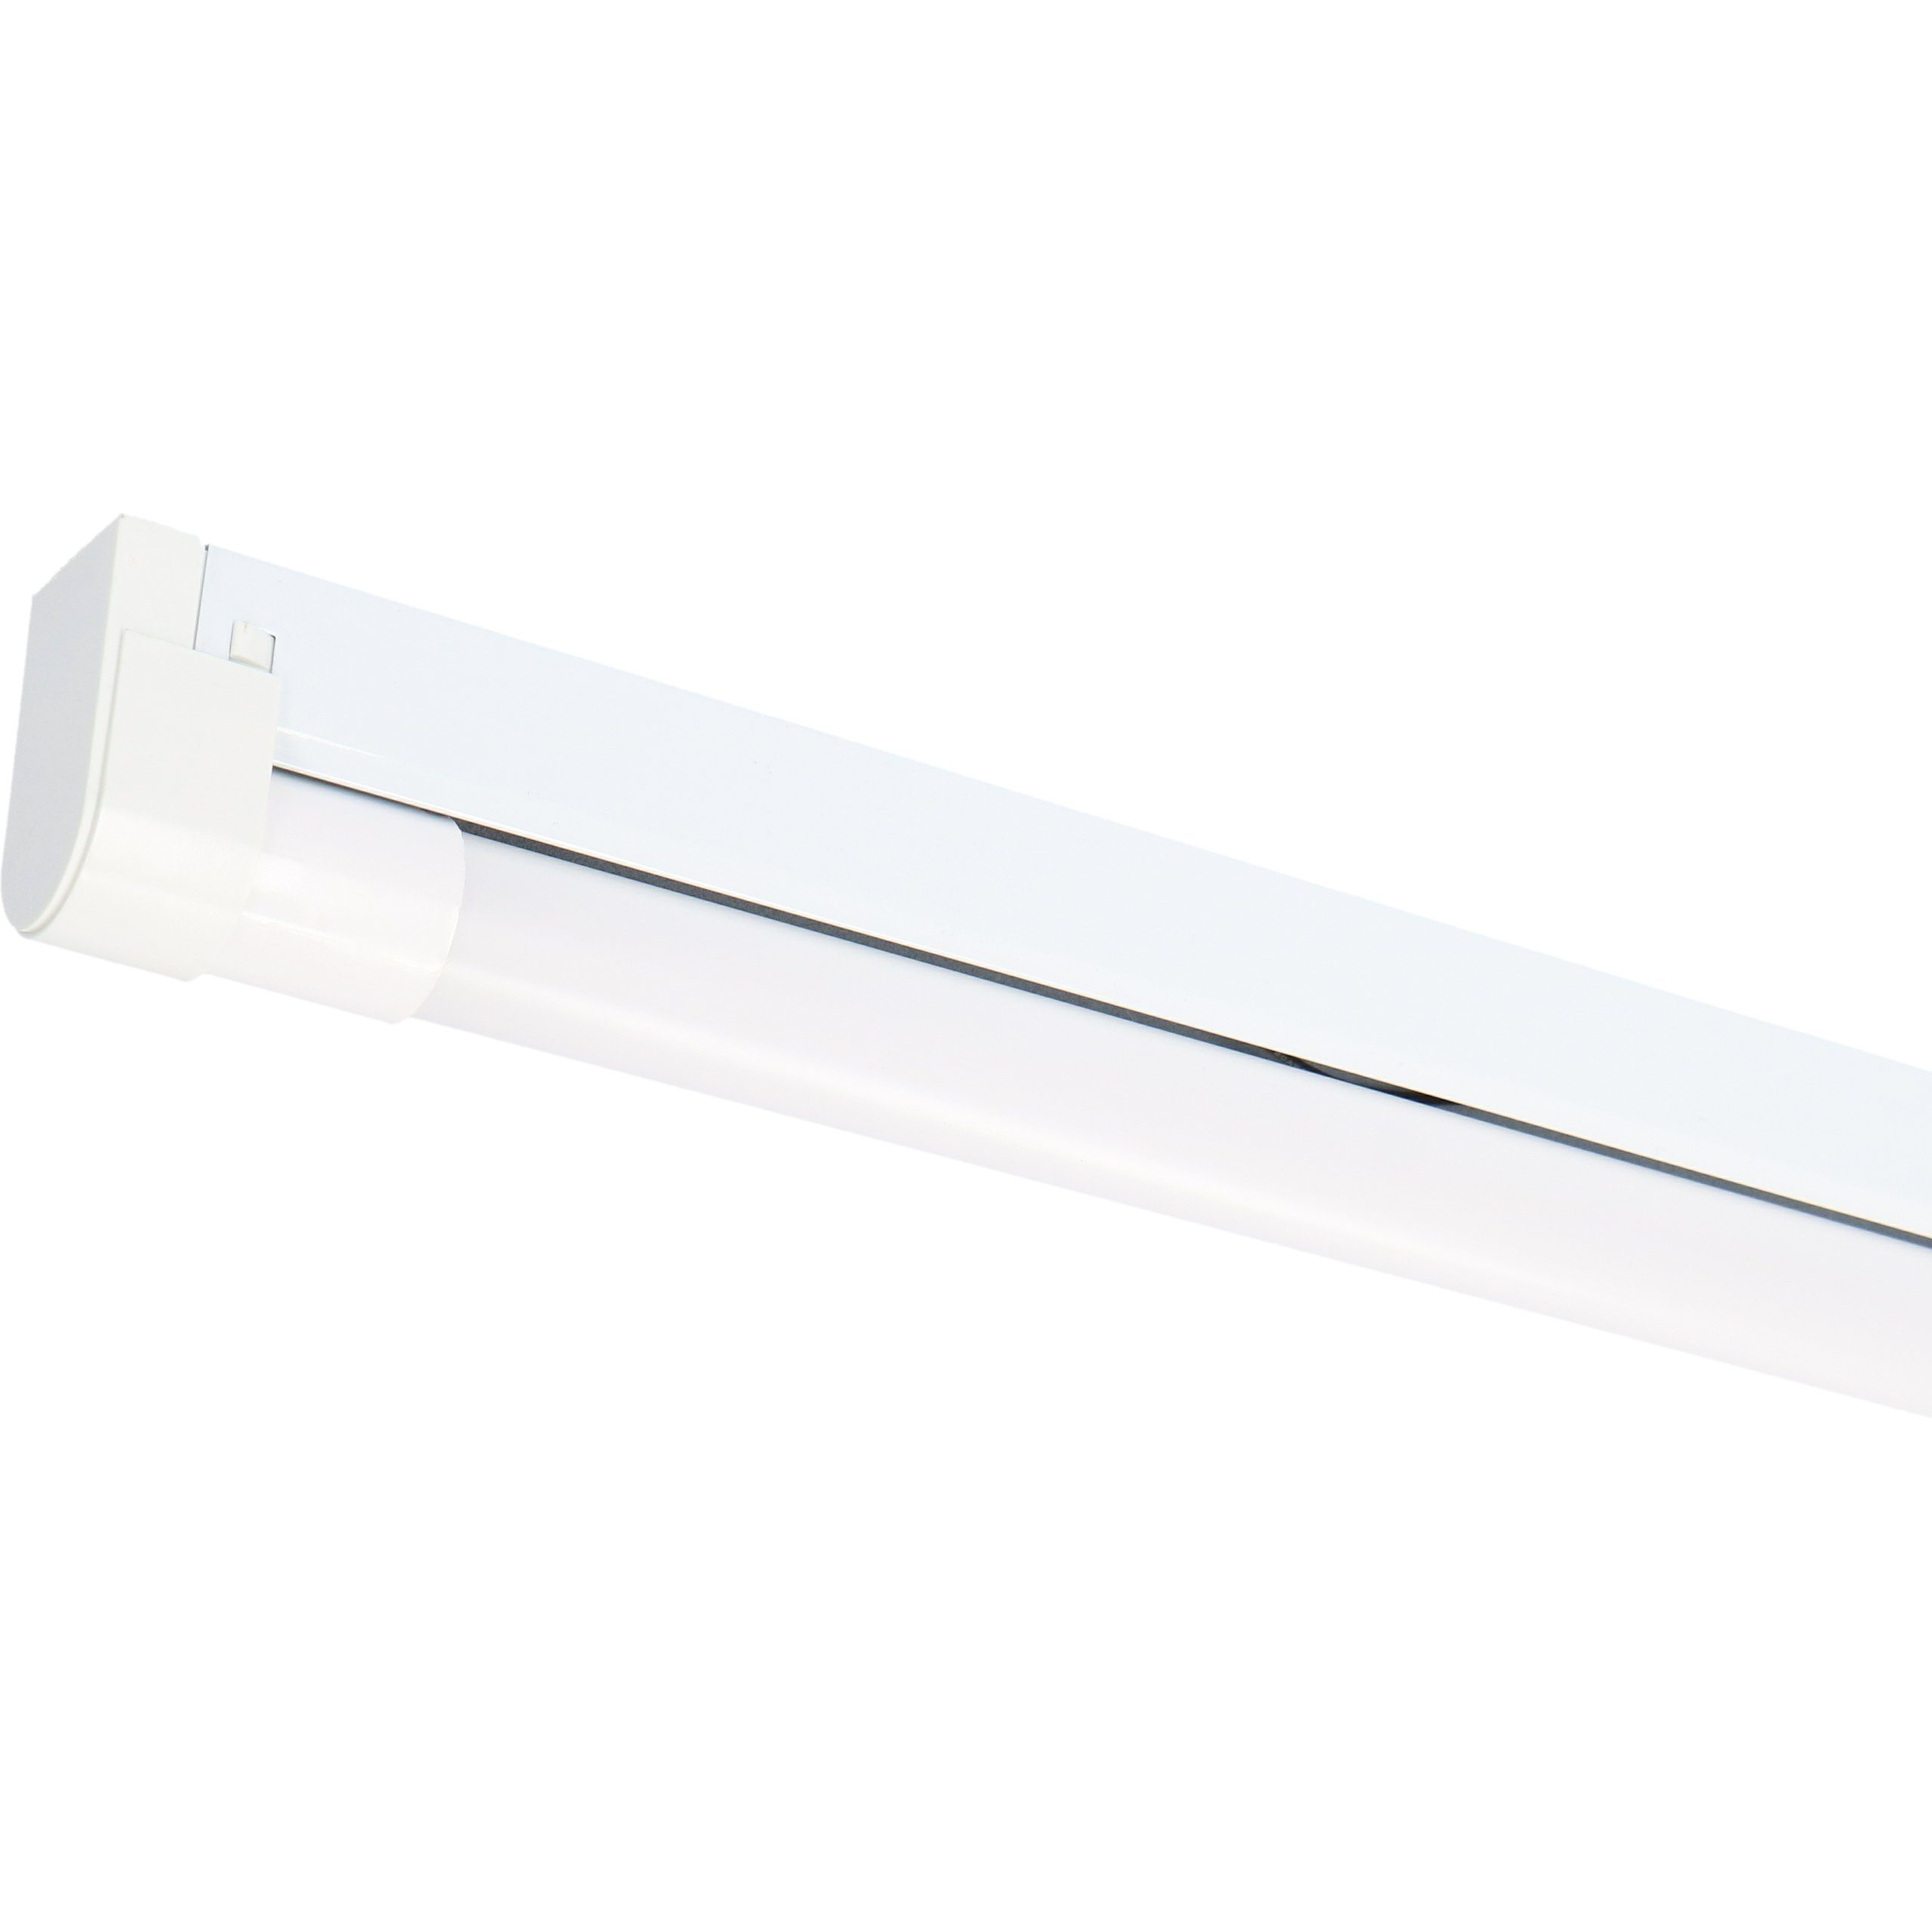 LED\'s light LED Unterbauleuchte 2400209 LED-Unterbauleuchte mit LED-Röhre,  LED, 120 cm 9 Watt neutralweiß G13